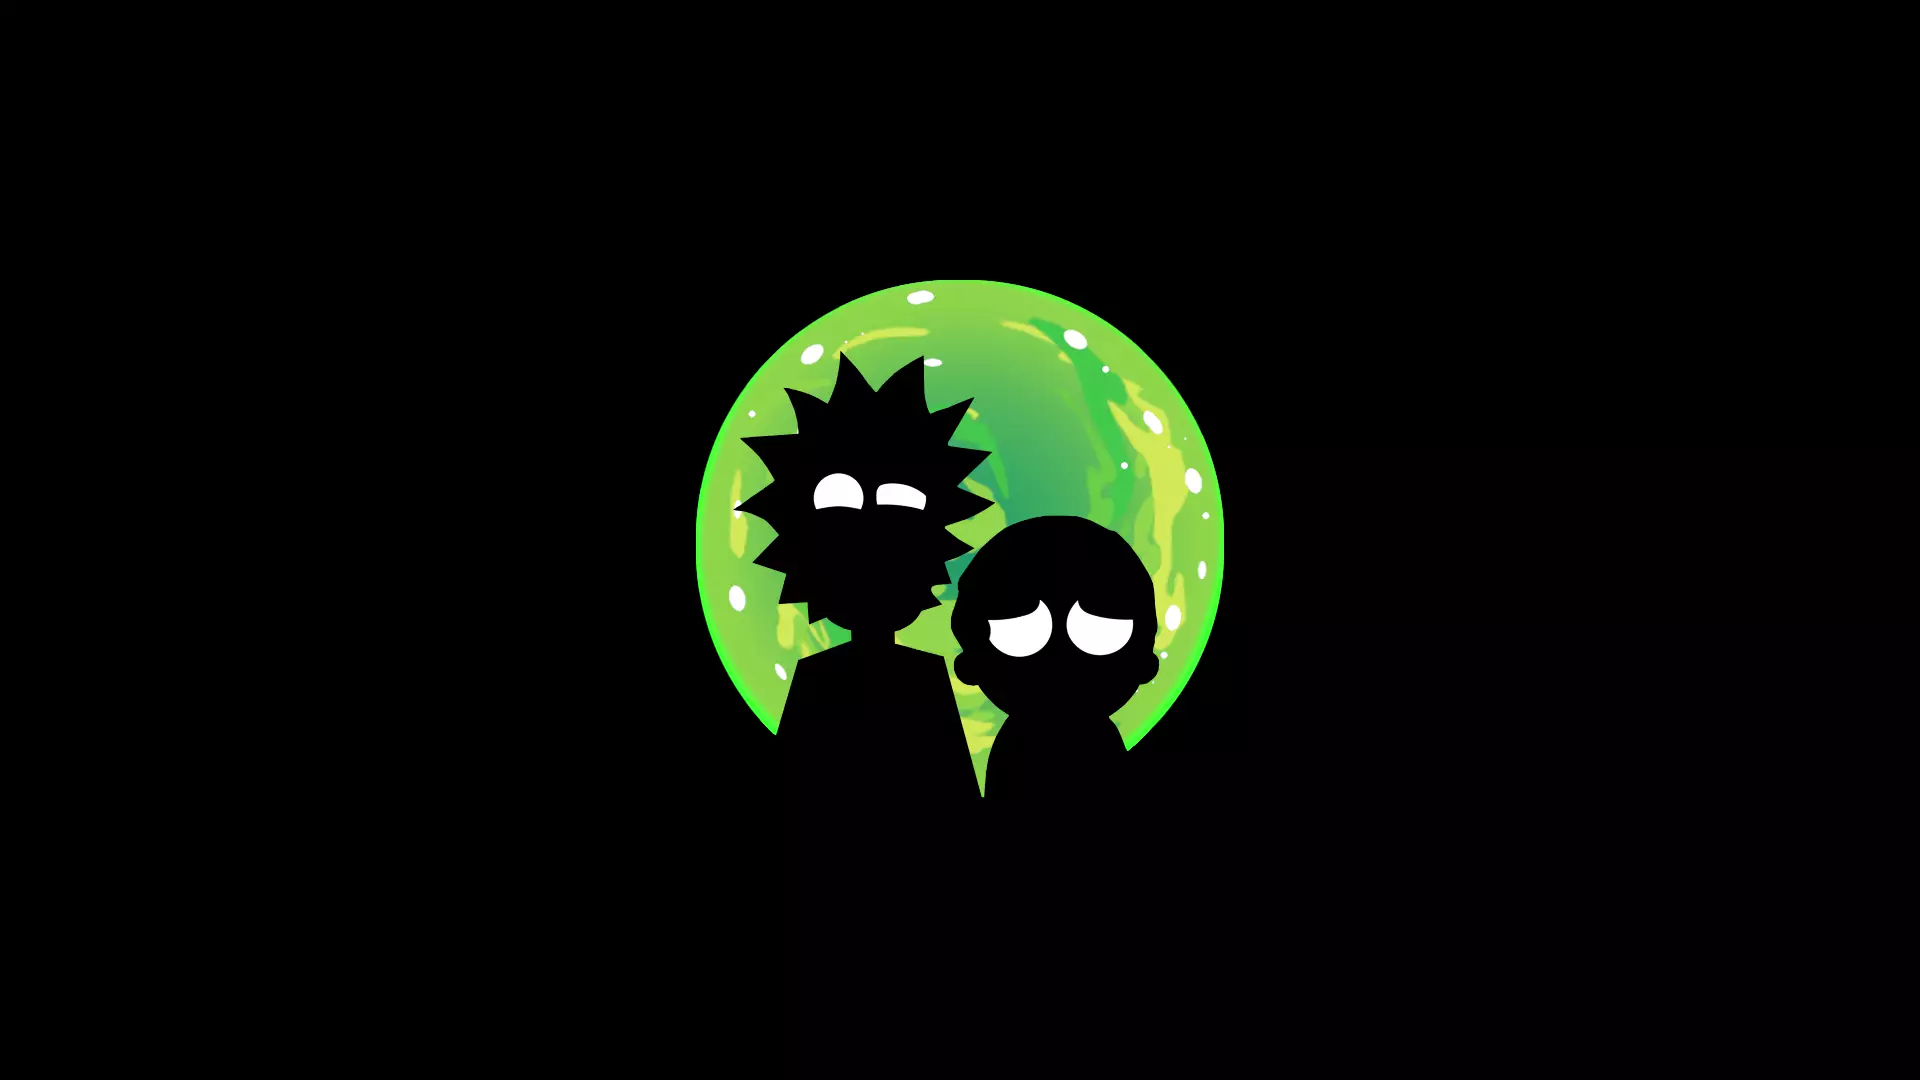 Video wallpaper Rick & Morty V2 (Cartoons)